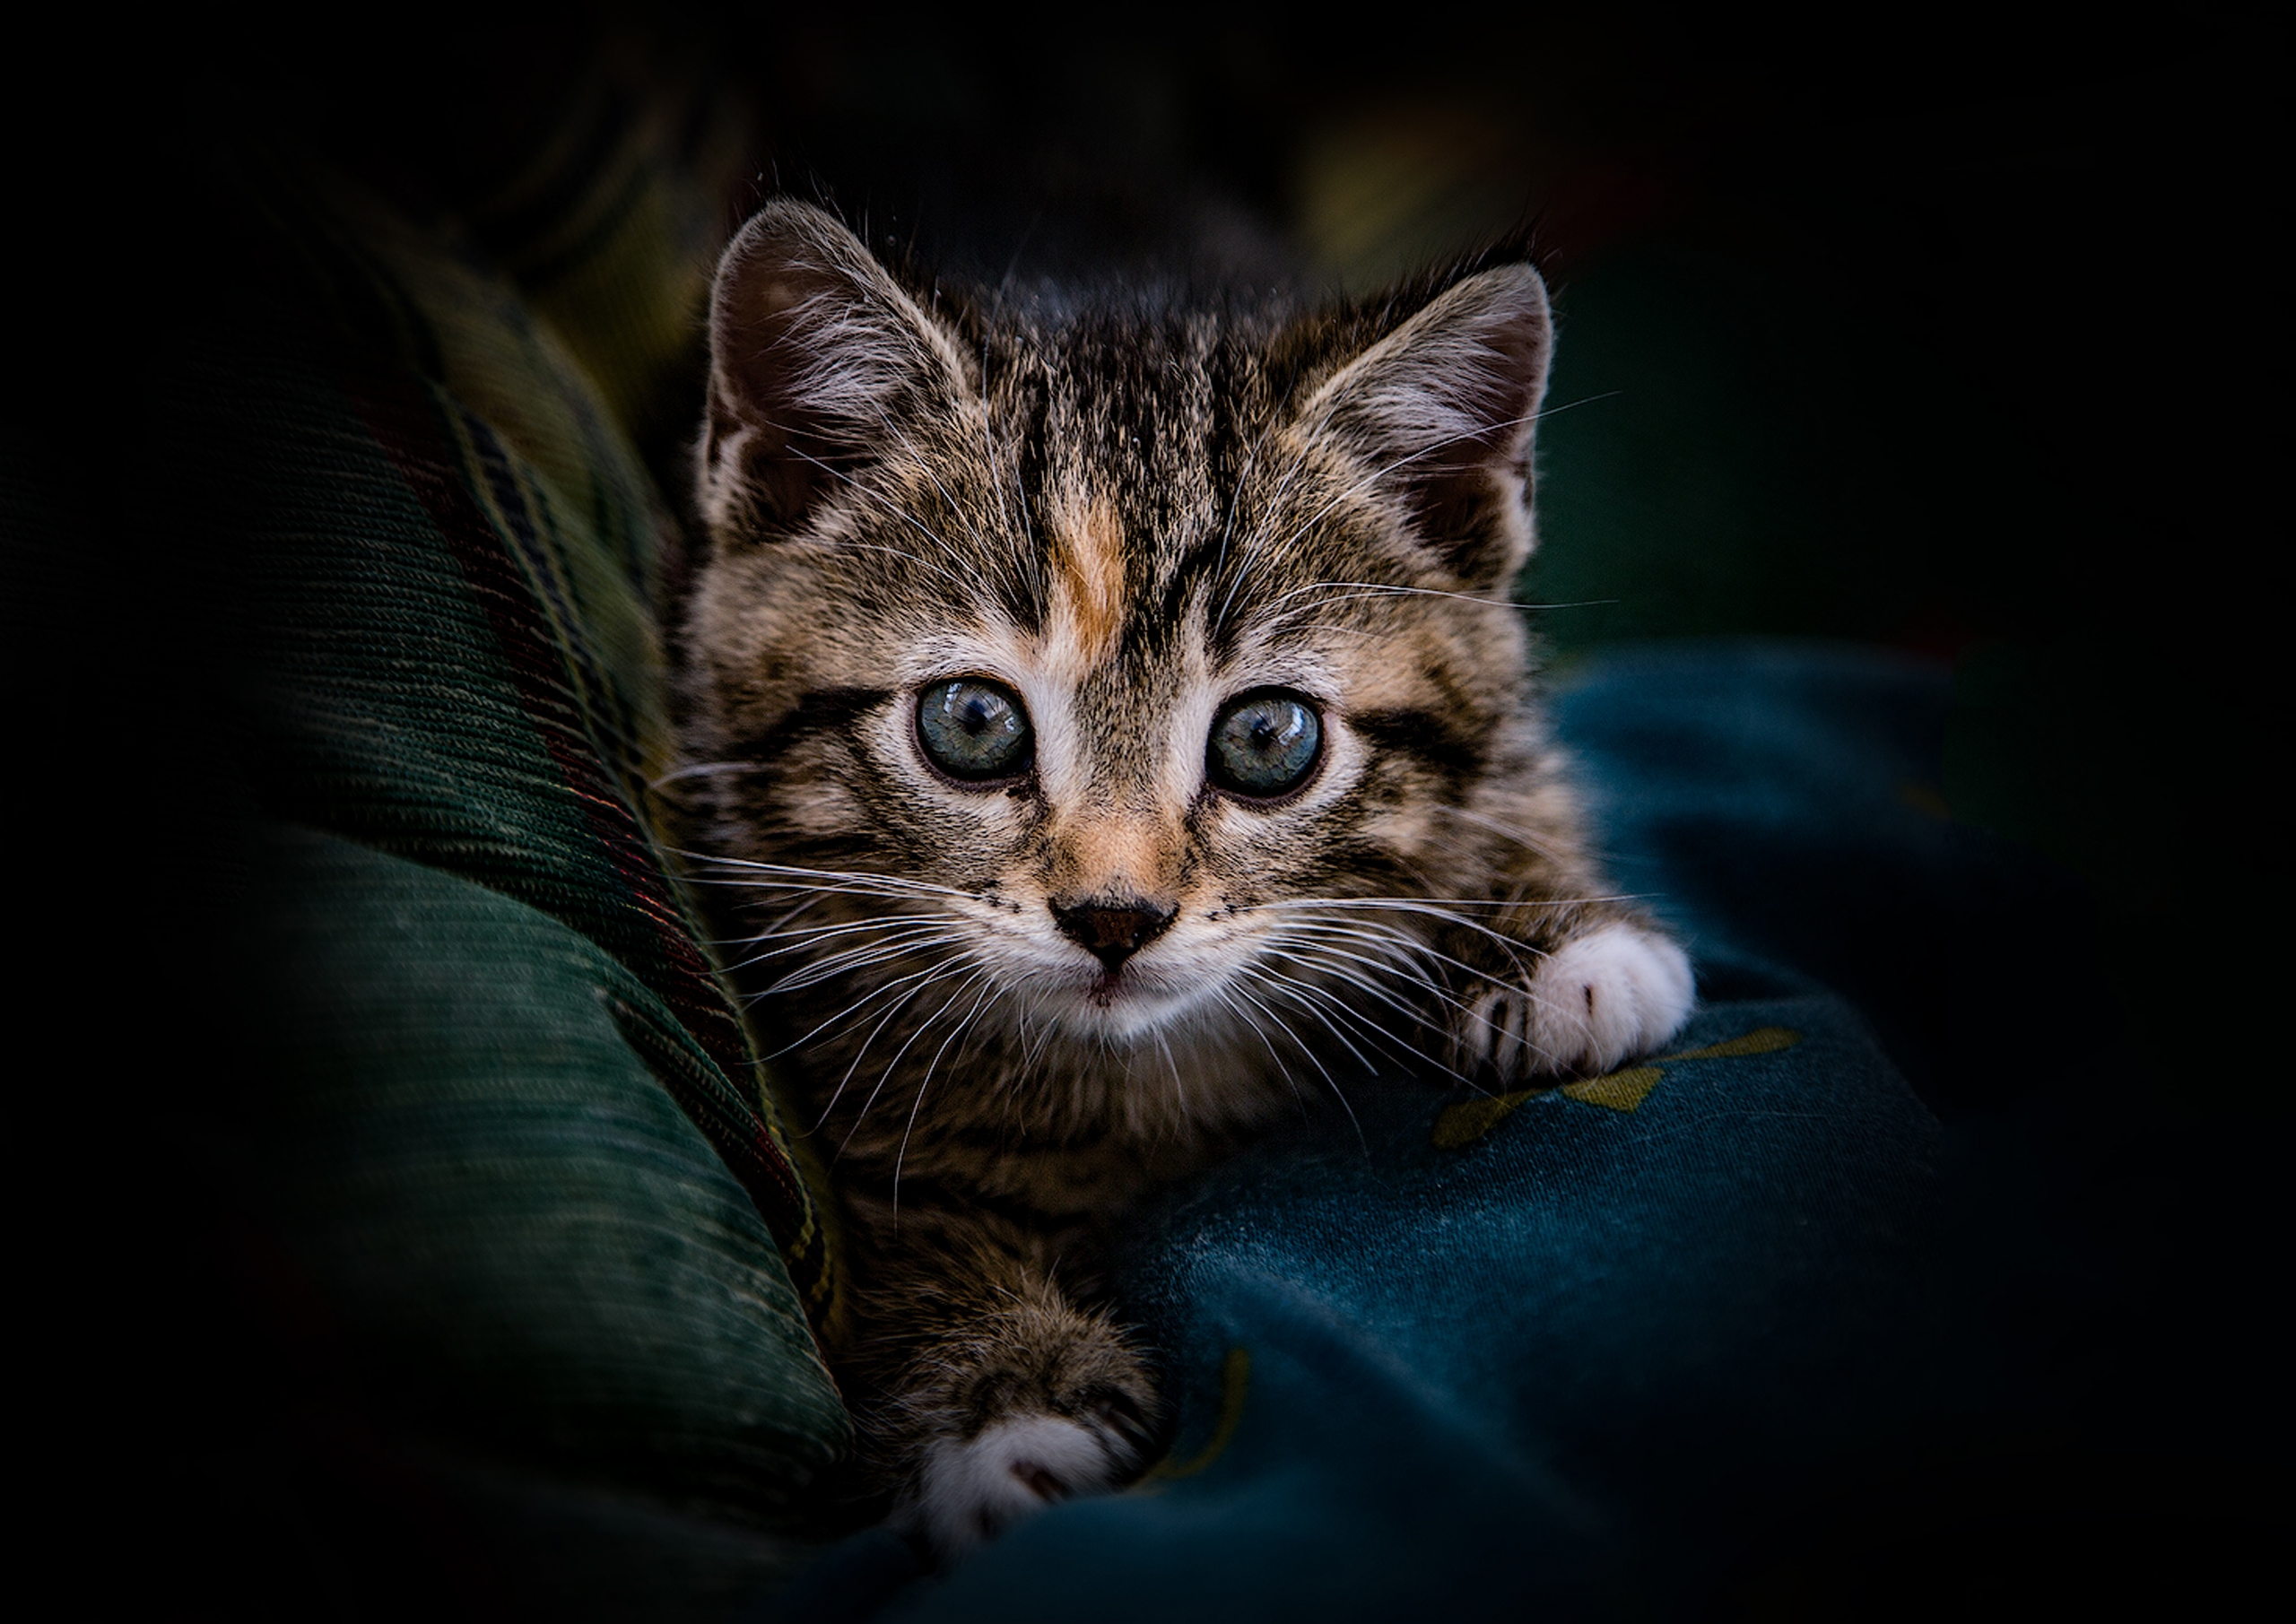 Kitten by Ned Mahon